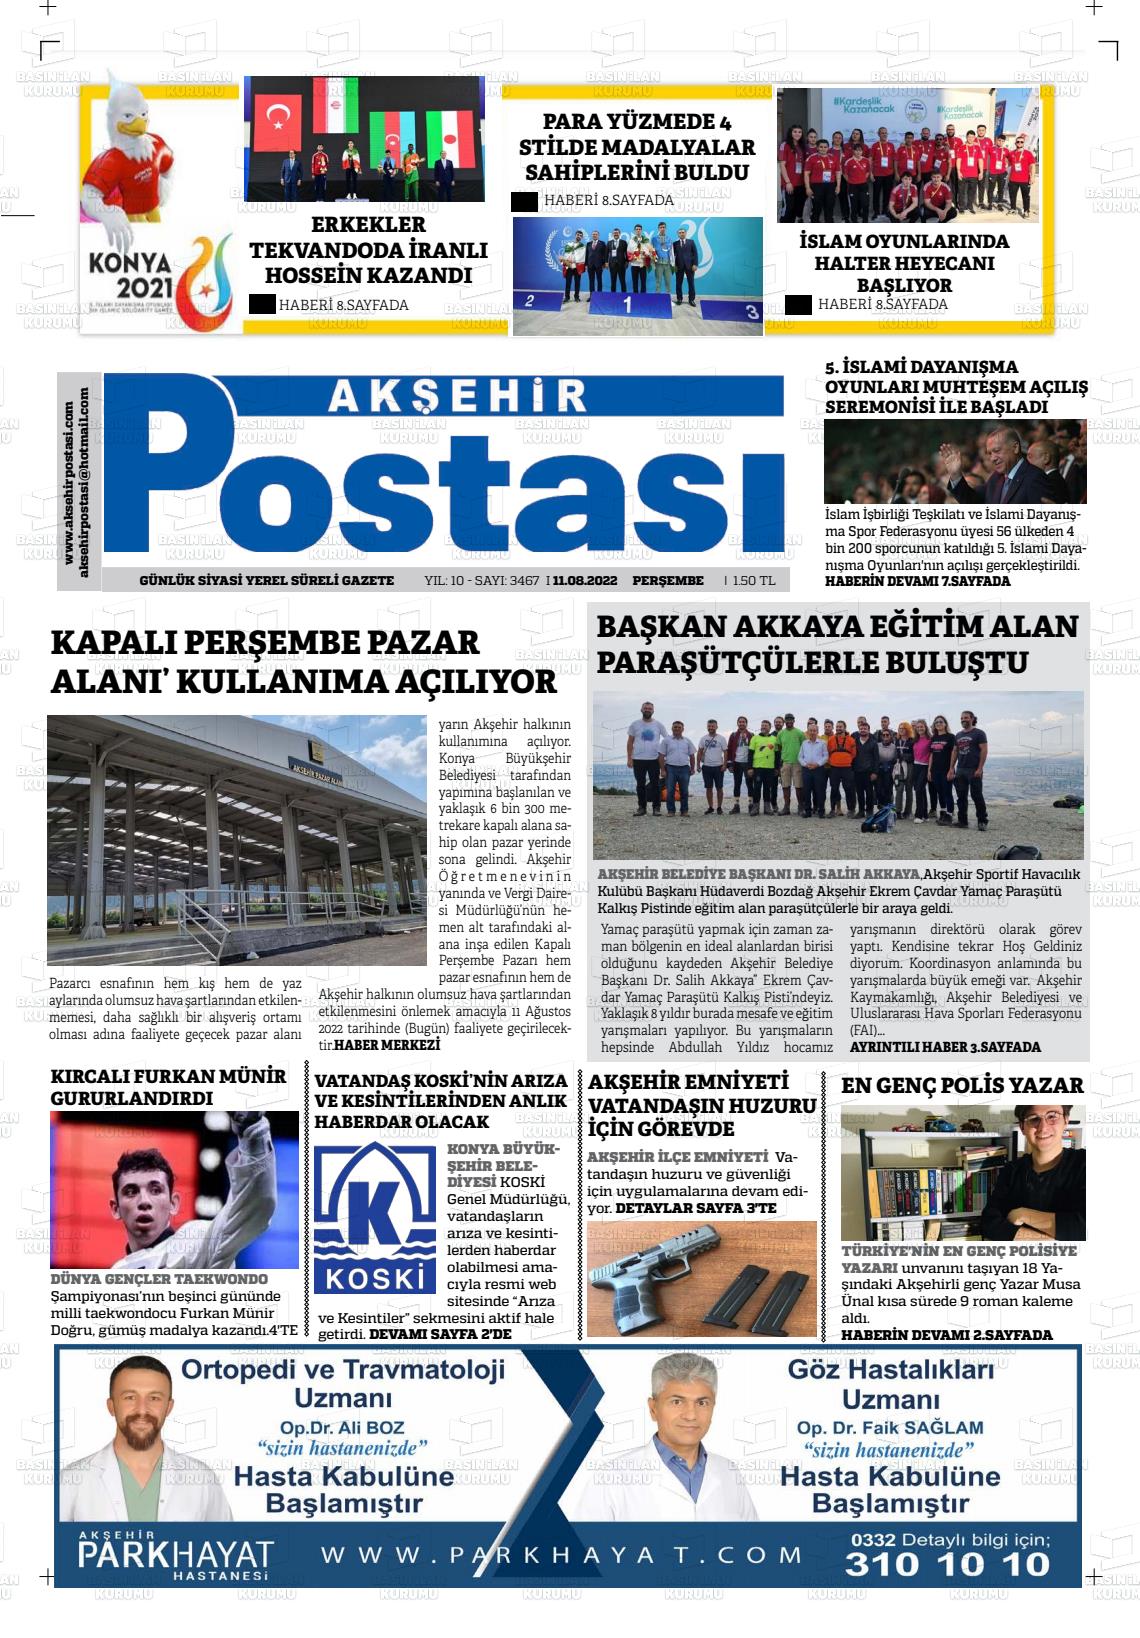 11 Ağustos 2022 Akşehir Postasi Gazete Manşeti